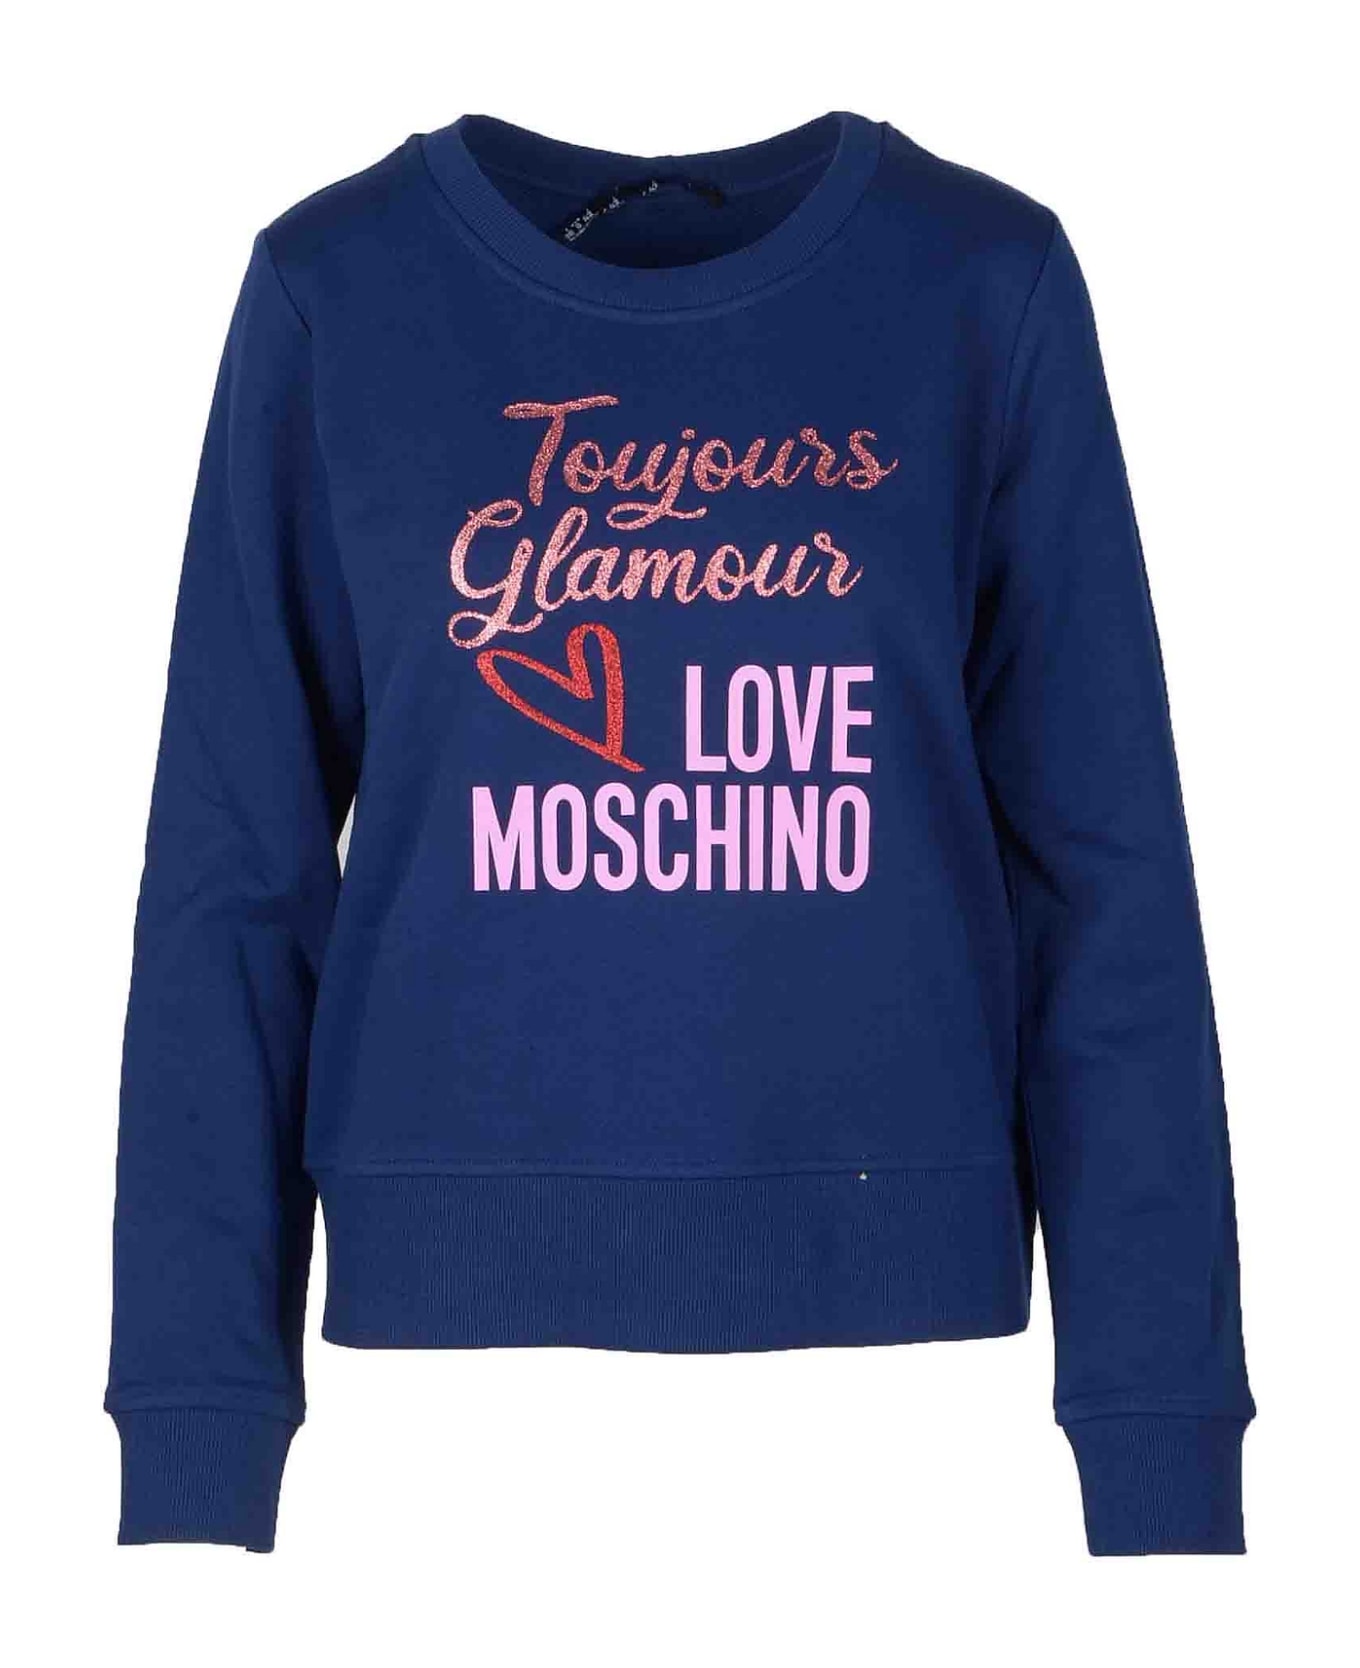 Love Moschino Women's Blue Sweatshirt - Blue